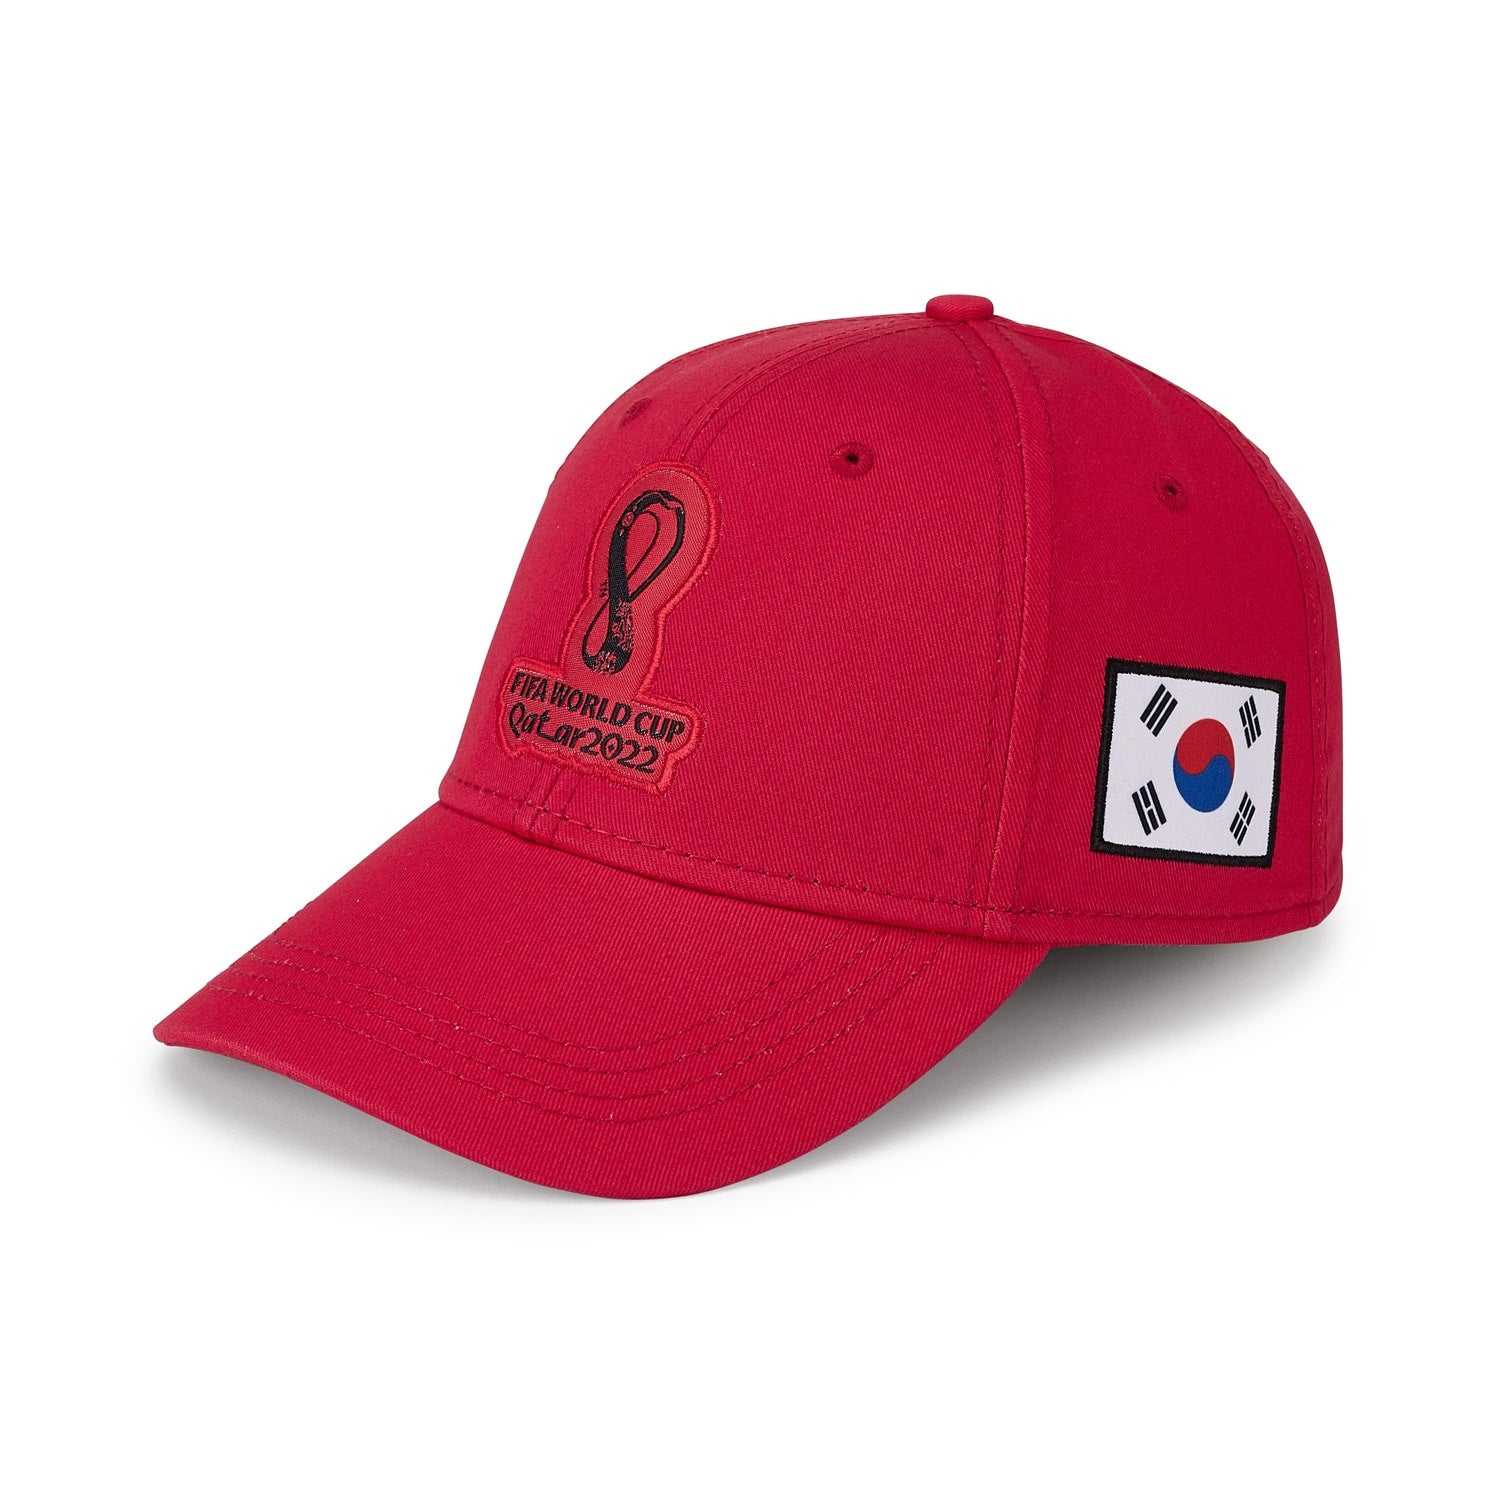 2022 World Cup South Korea Red Cap - Men's